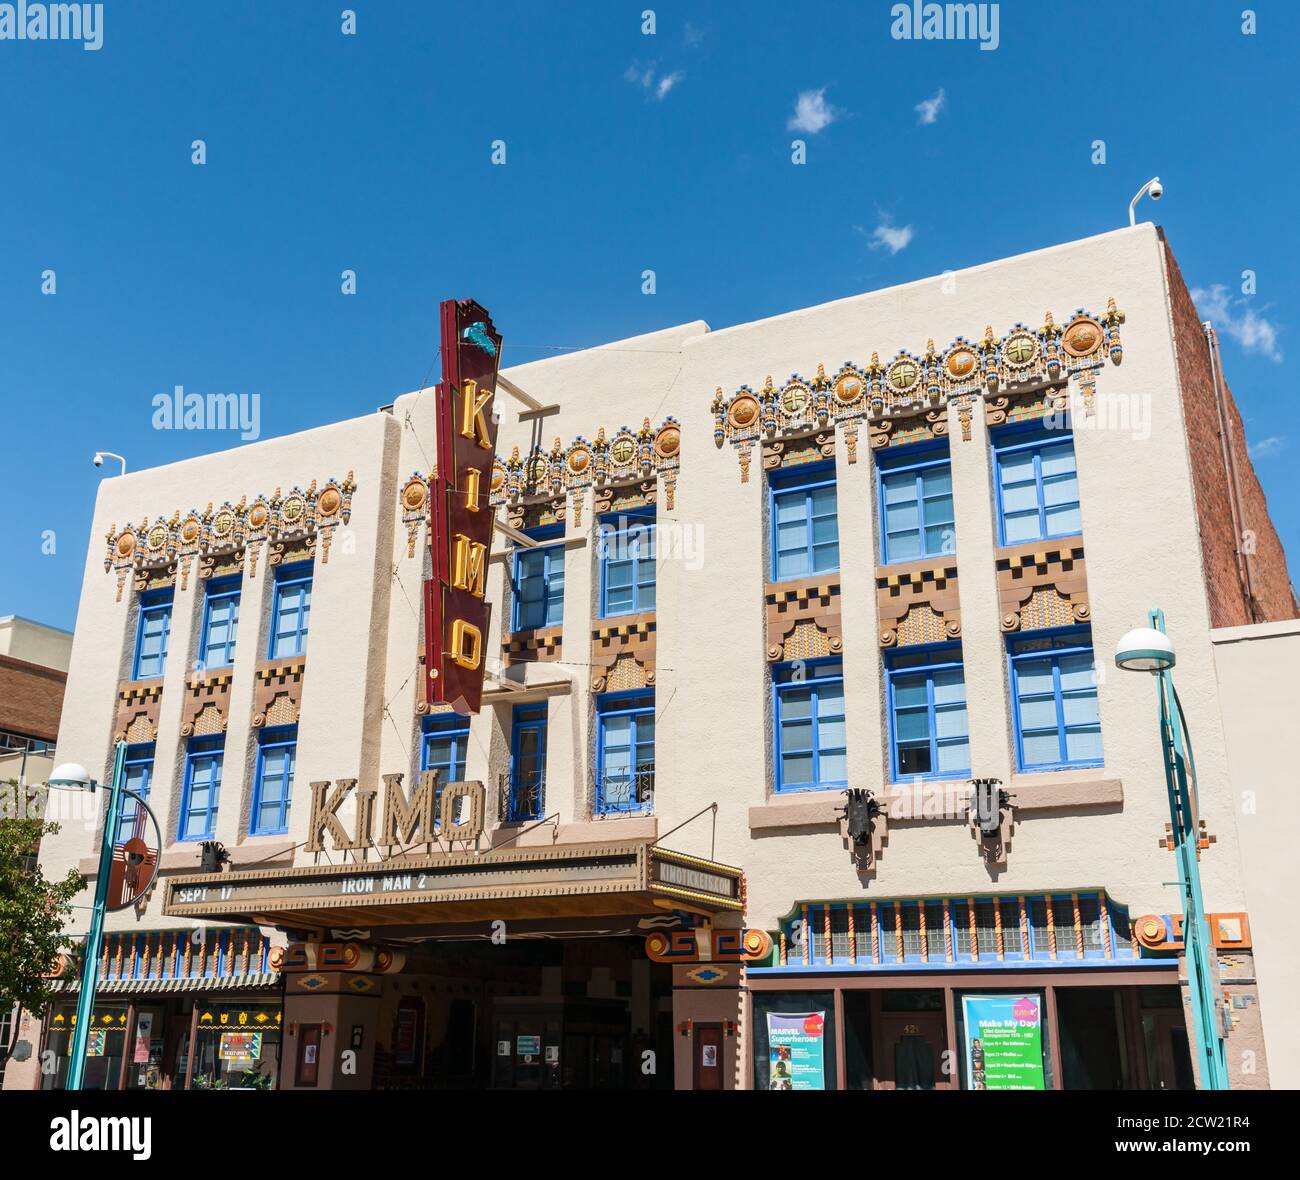 Albuquerque USA September 18 2015; Exterior intricate and  retro detailof exterior facade and signage of Kimo Theatre and historic landmark. Stock Photo